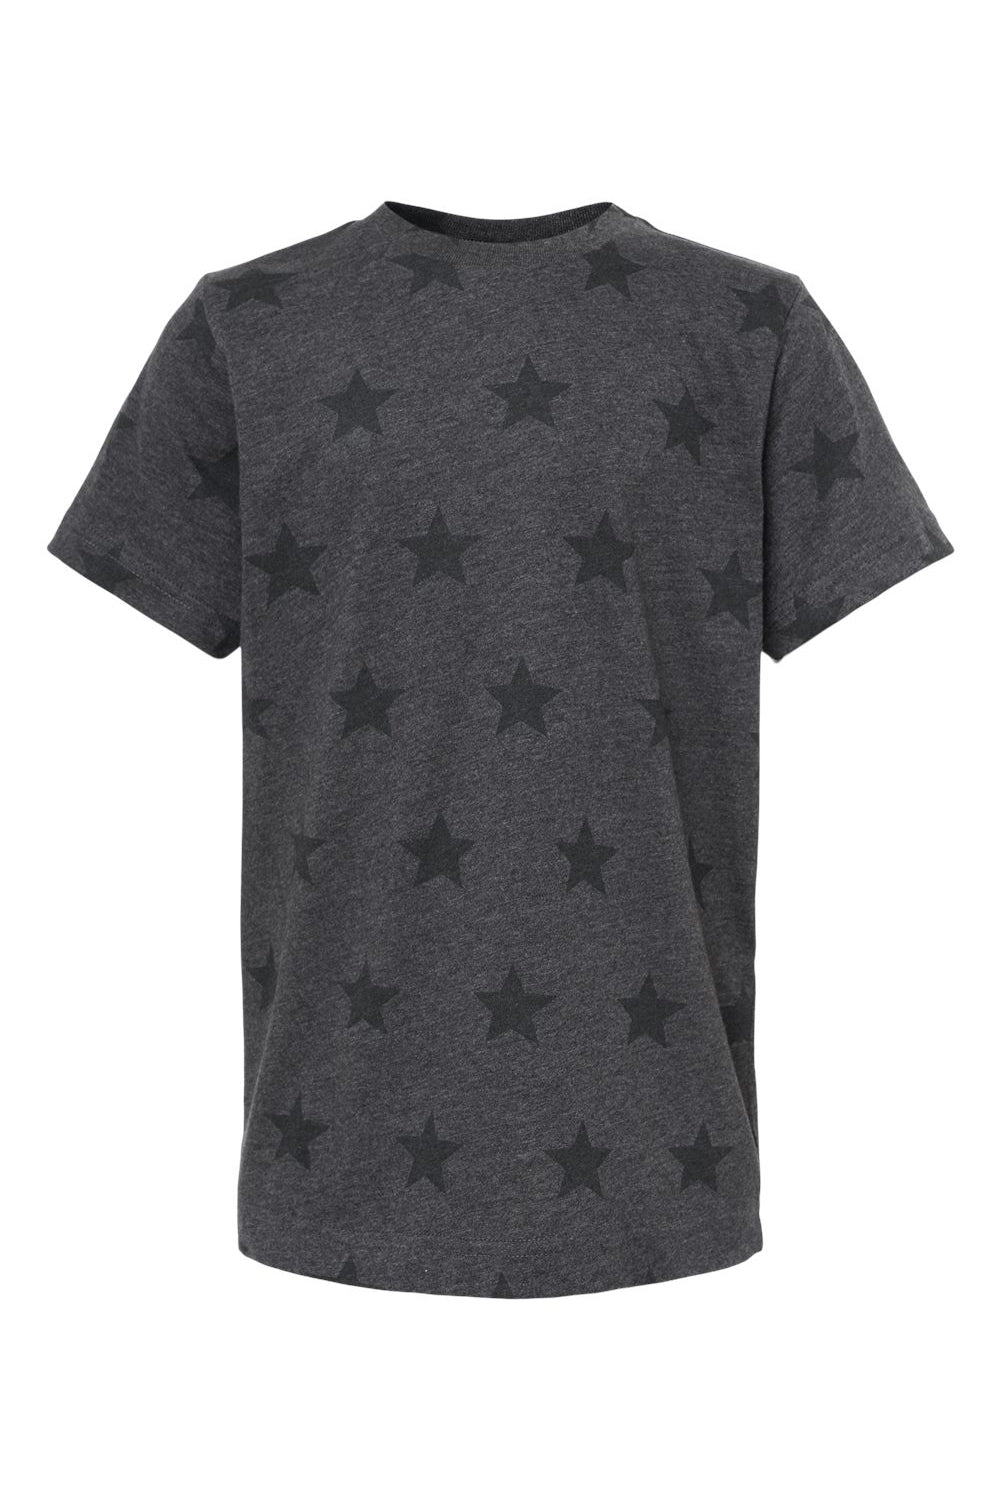 Code Five 2229 Youth Star Print Short Sleeve Crewneck T-Shirt Smoke Grey Flat Front